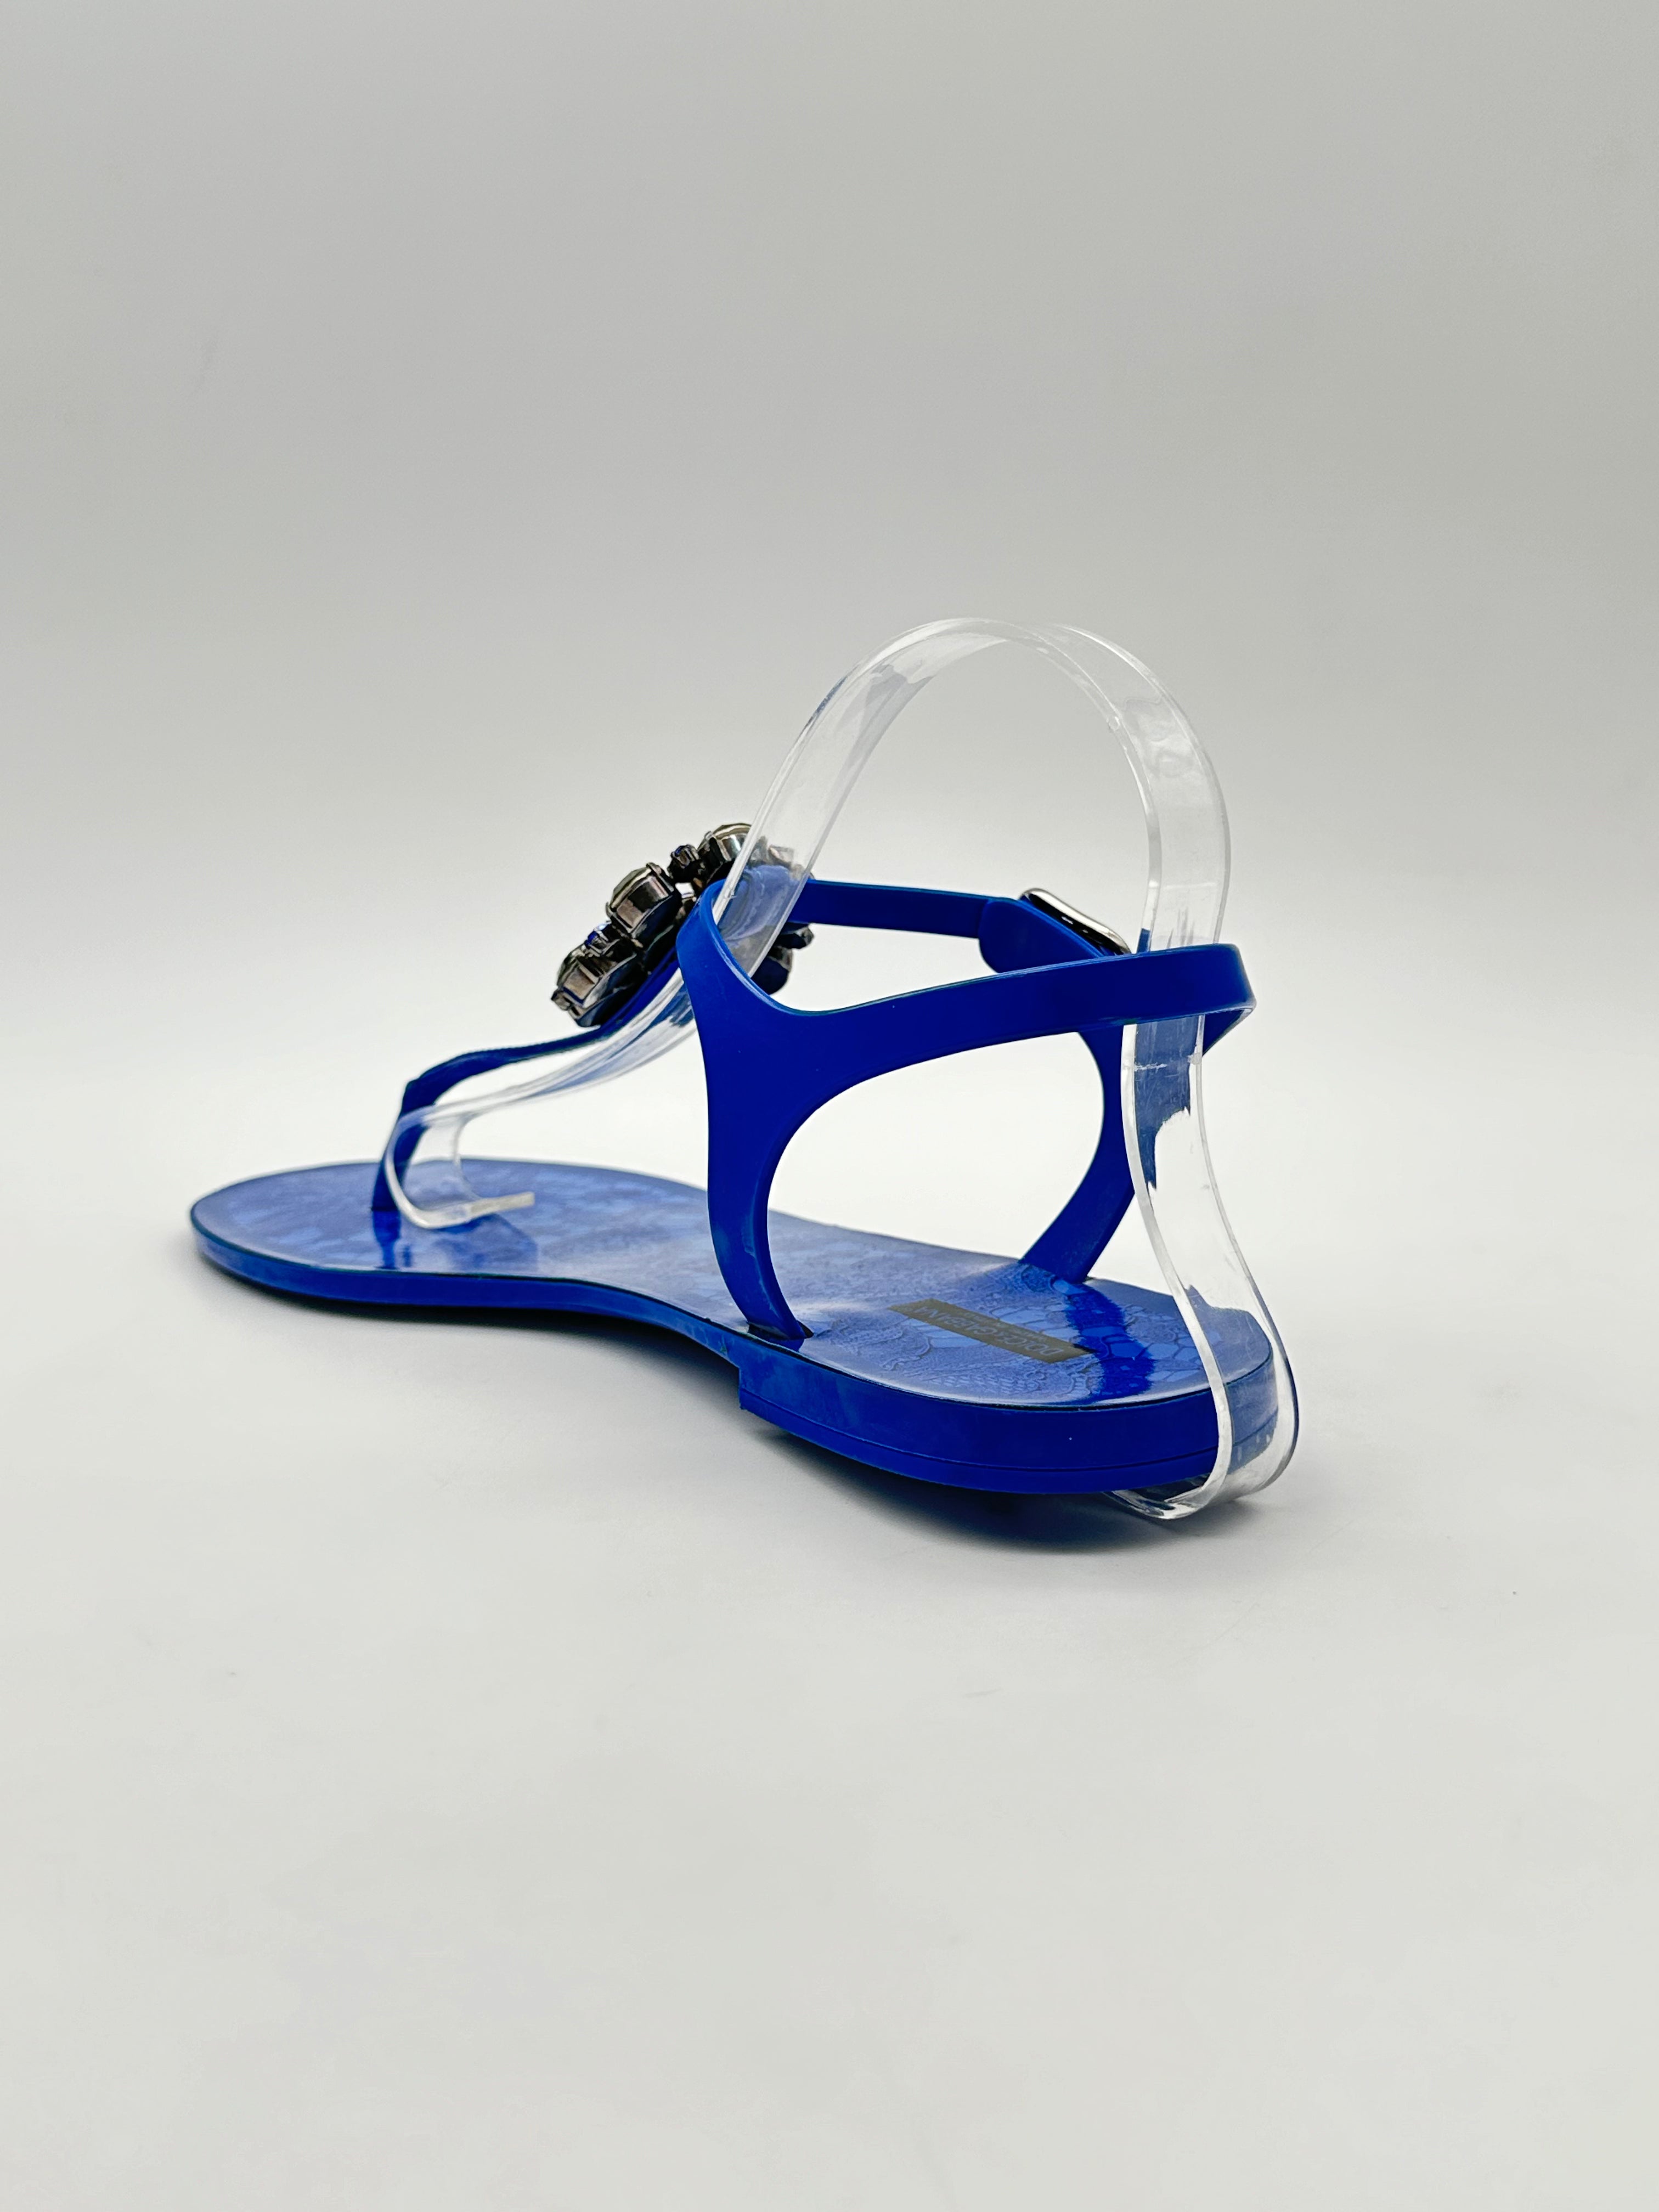 Blue Sandal With Diamonds